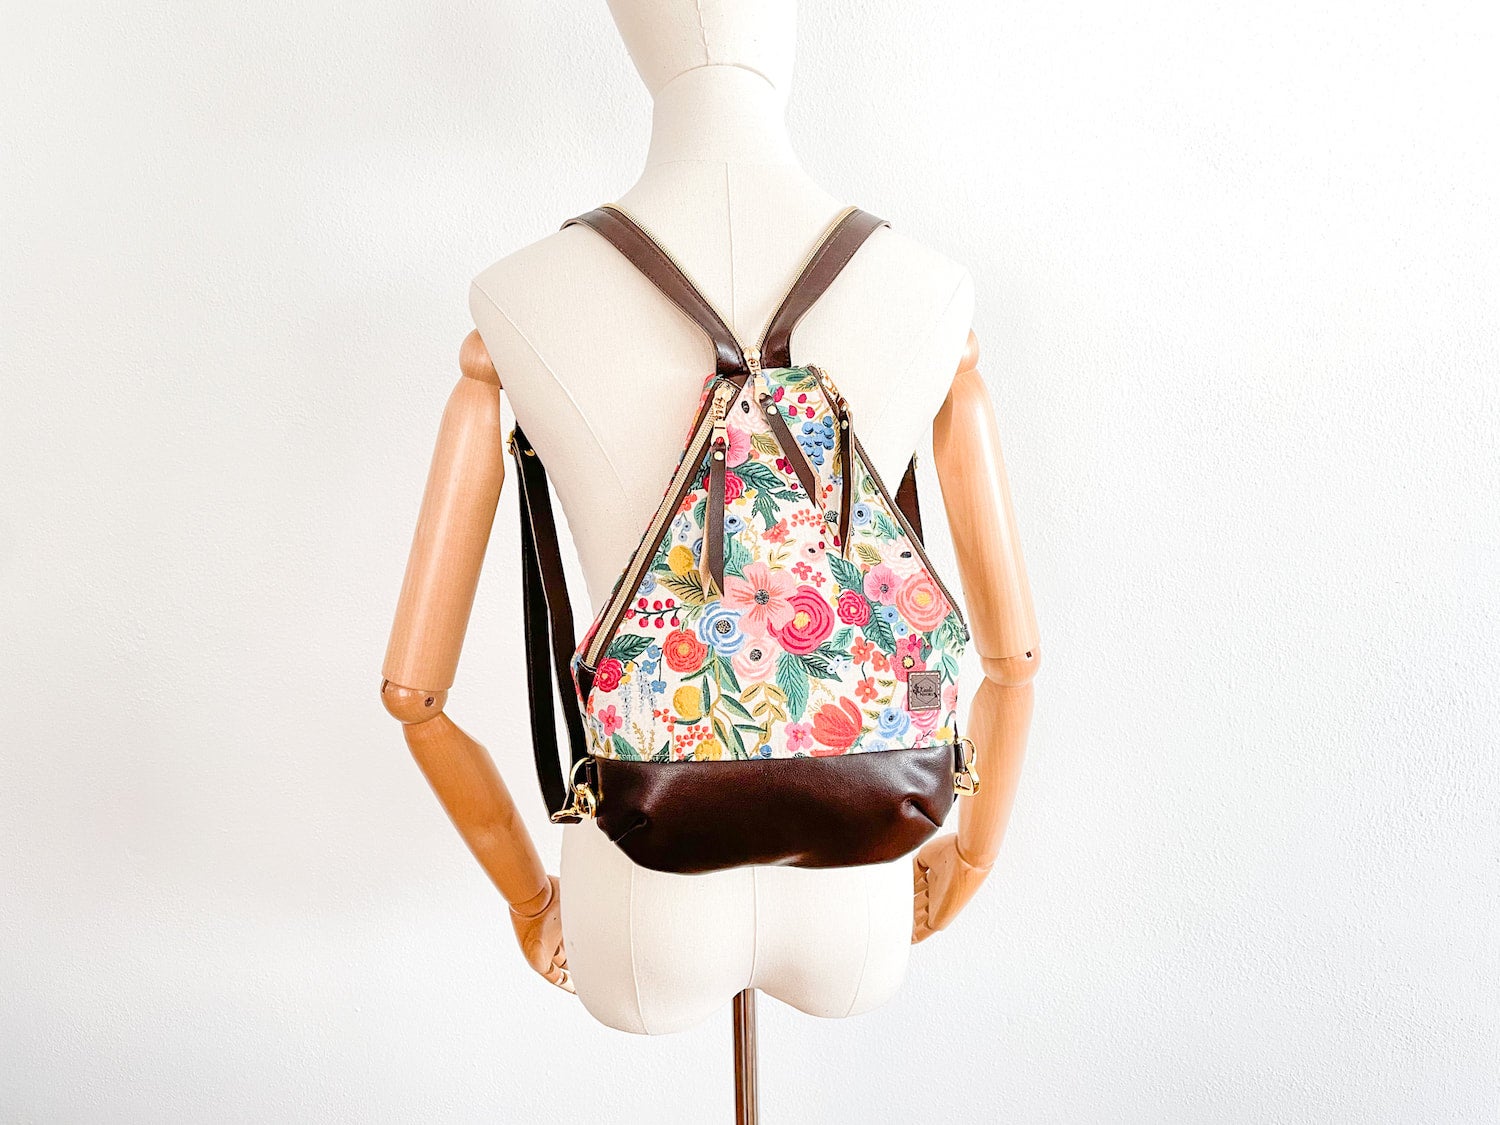 Women's Silk Beaded Evening Clutch, Party Handbag or Wedding Purse Sling Bag  | eBay